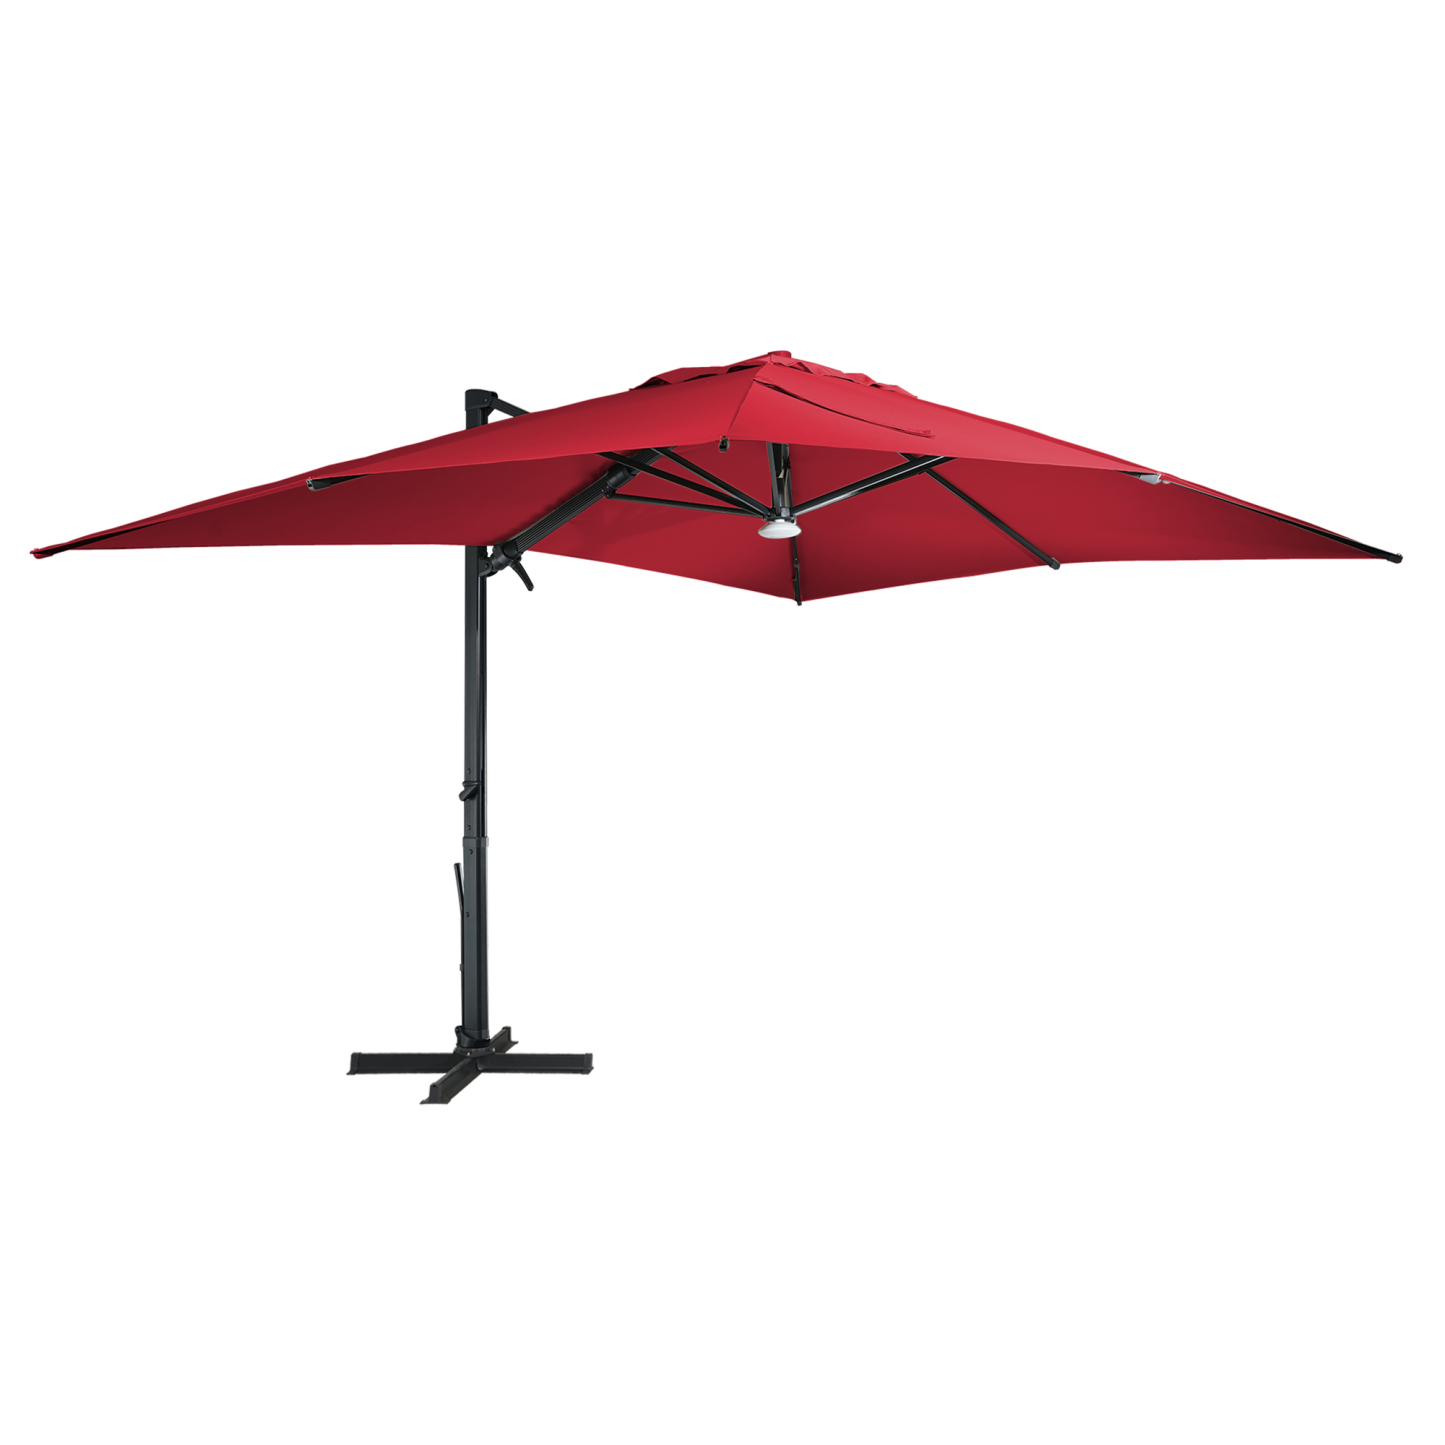 Mondawe 10x13 ft Square Patio Cantilever Umbrella with Bluetooth LED Lights